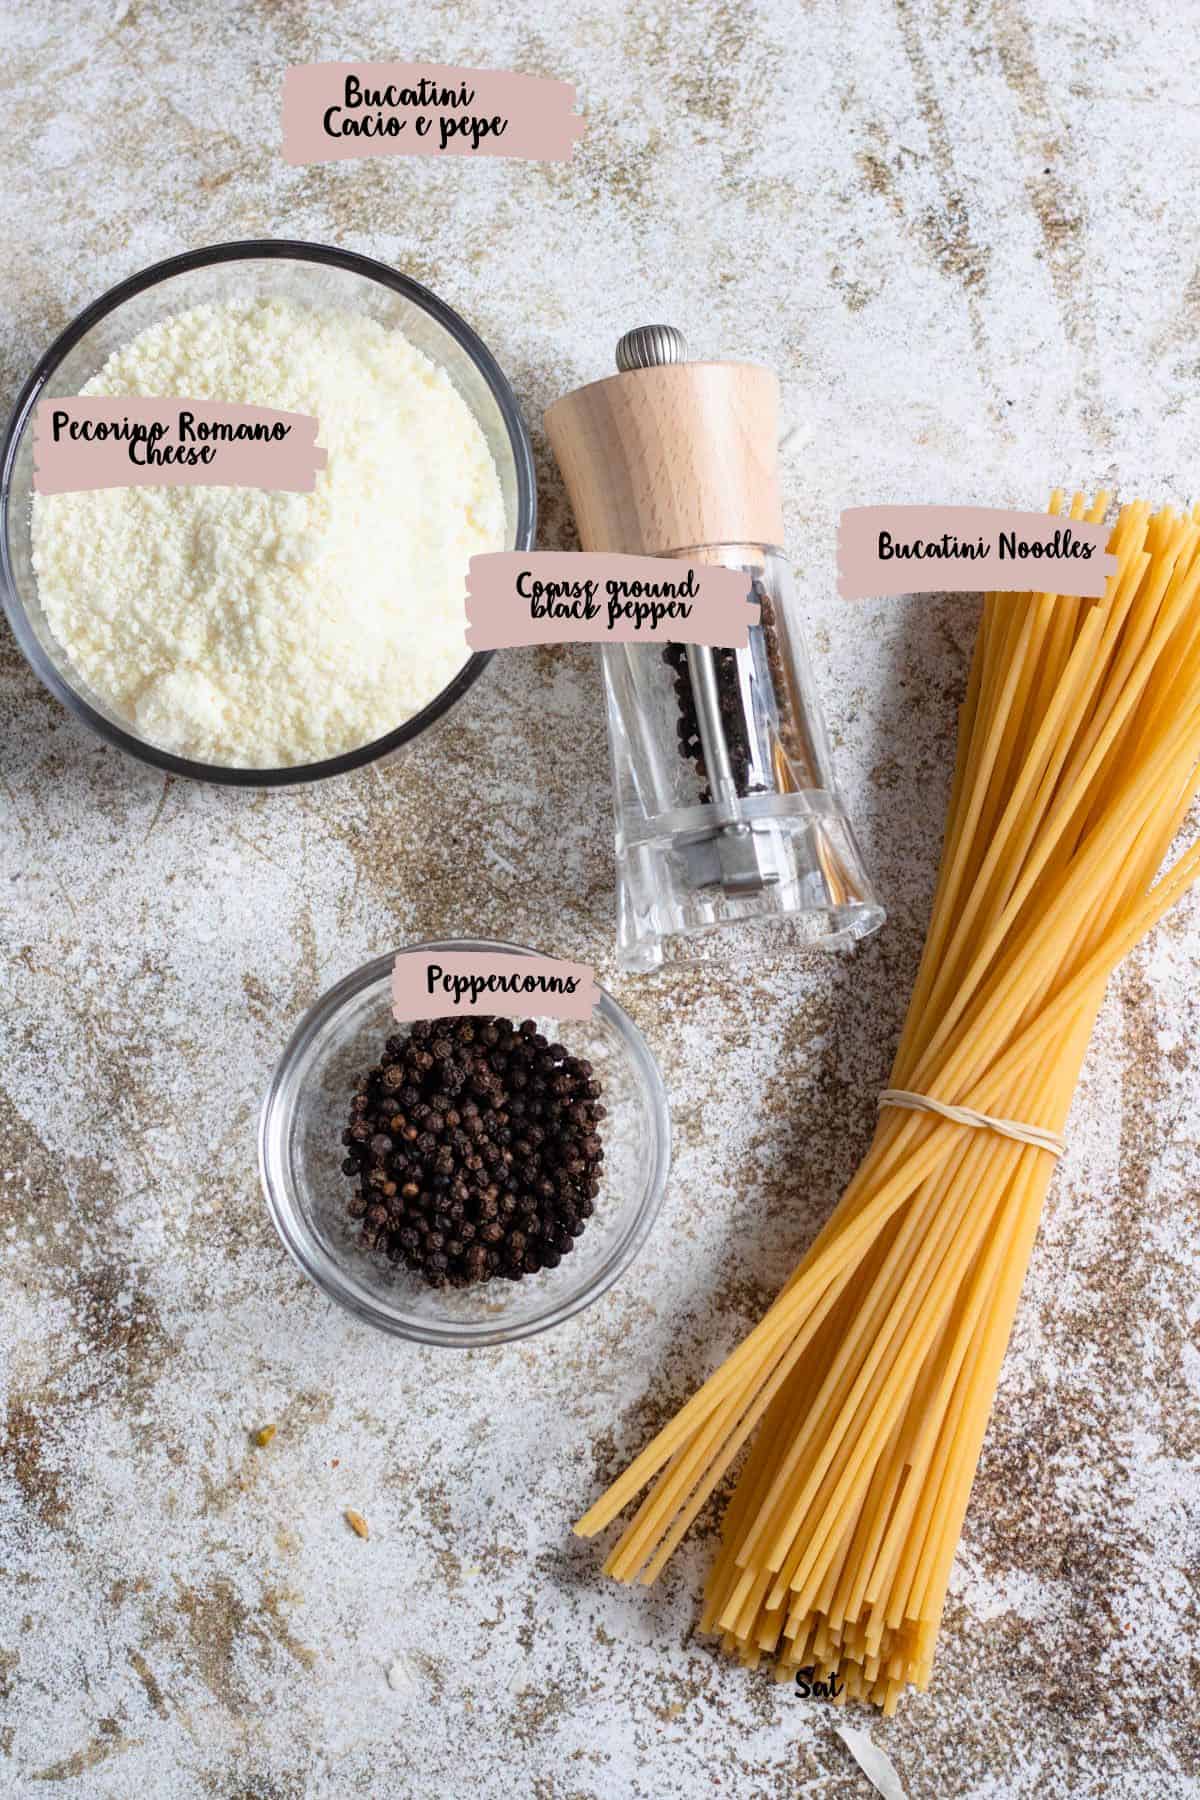 Ingredients shown are used to make bucatini cacio e pepe.